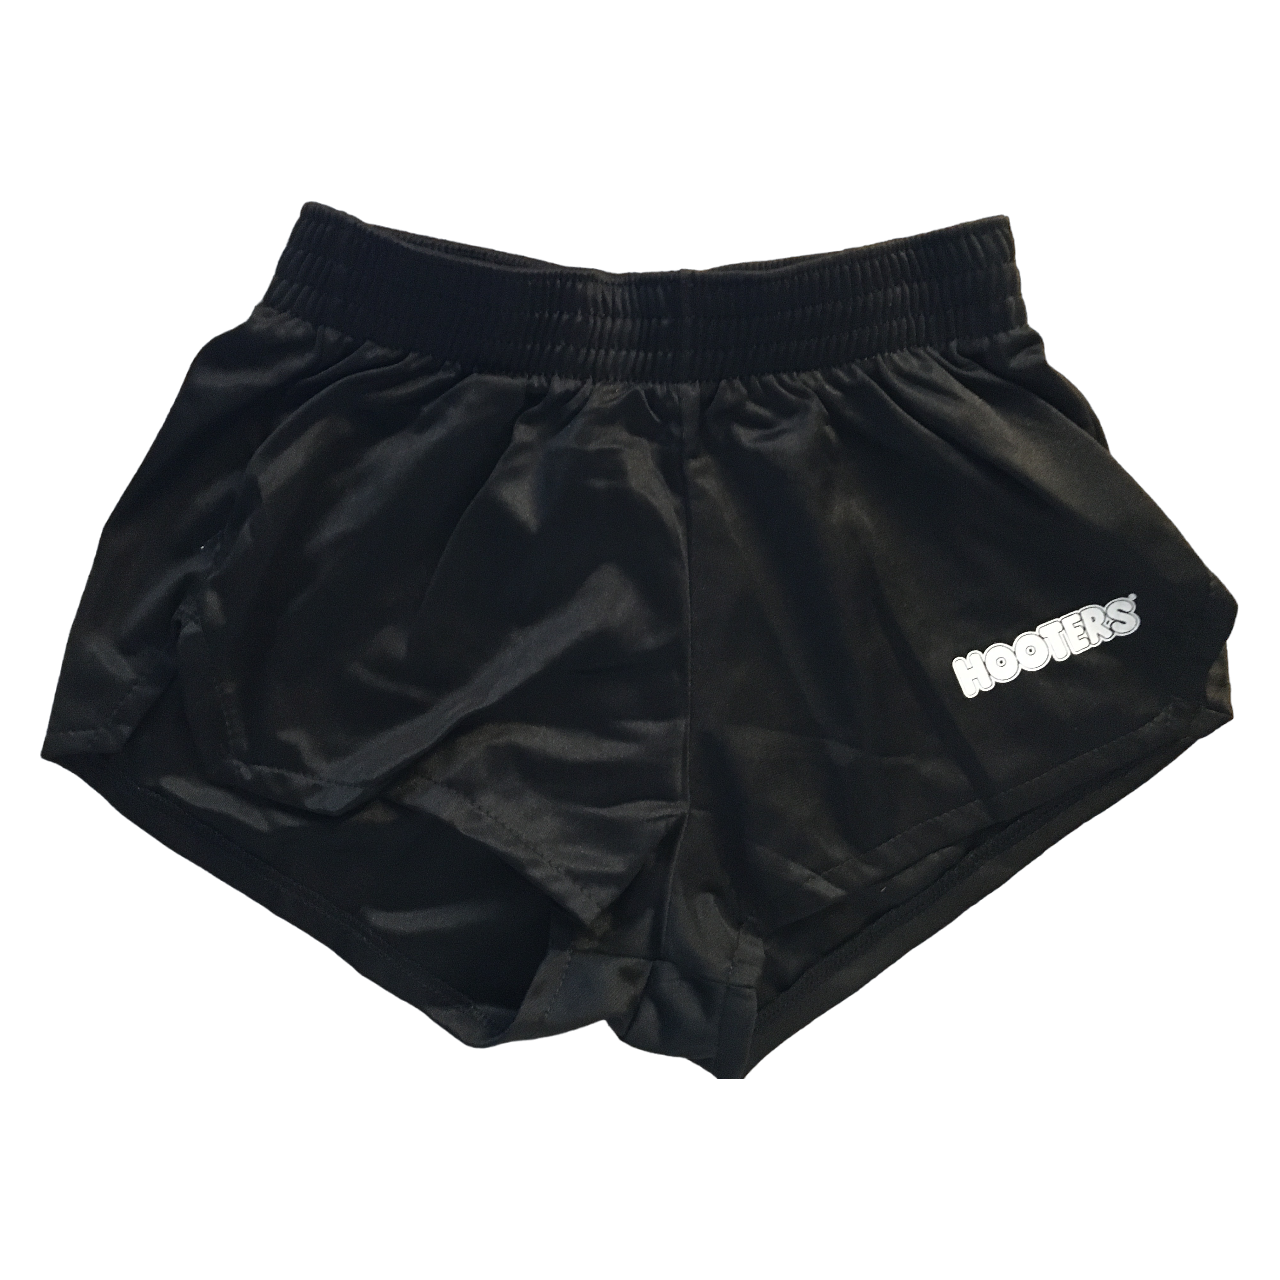 Hooters Women's Black Original Style Shorts by Jensen 2XS